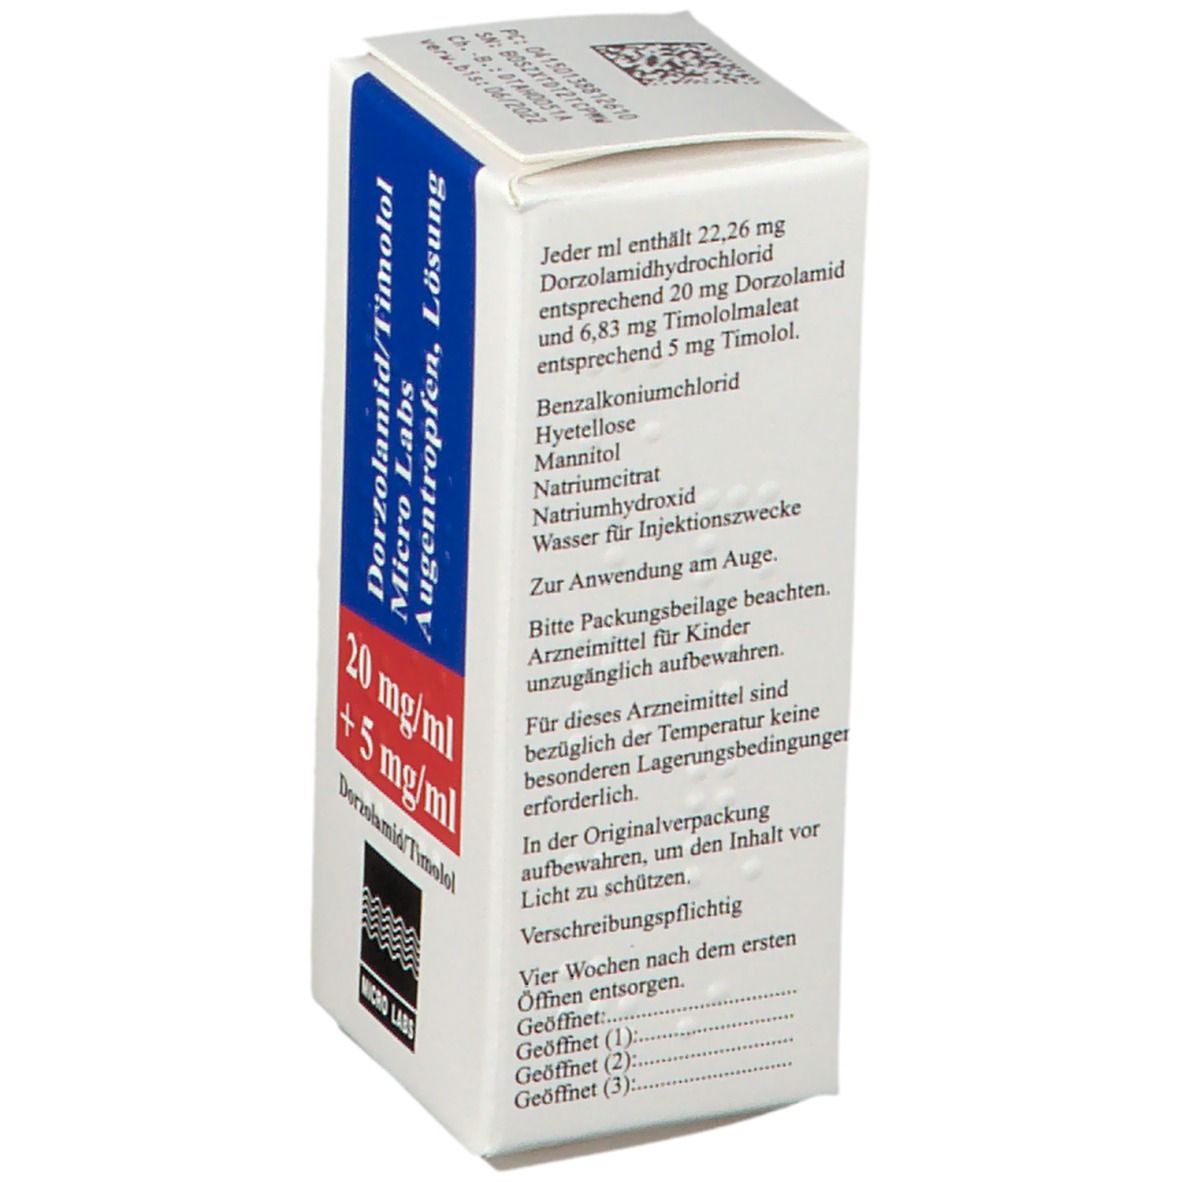 Dorzolamid/Timolol Micro Labs 20 mg/ml + 5 mg/ml